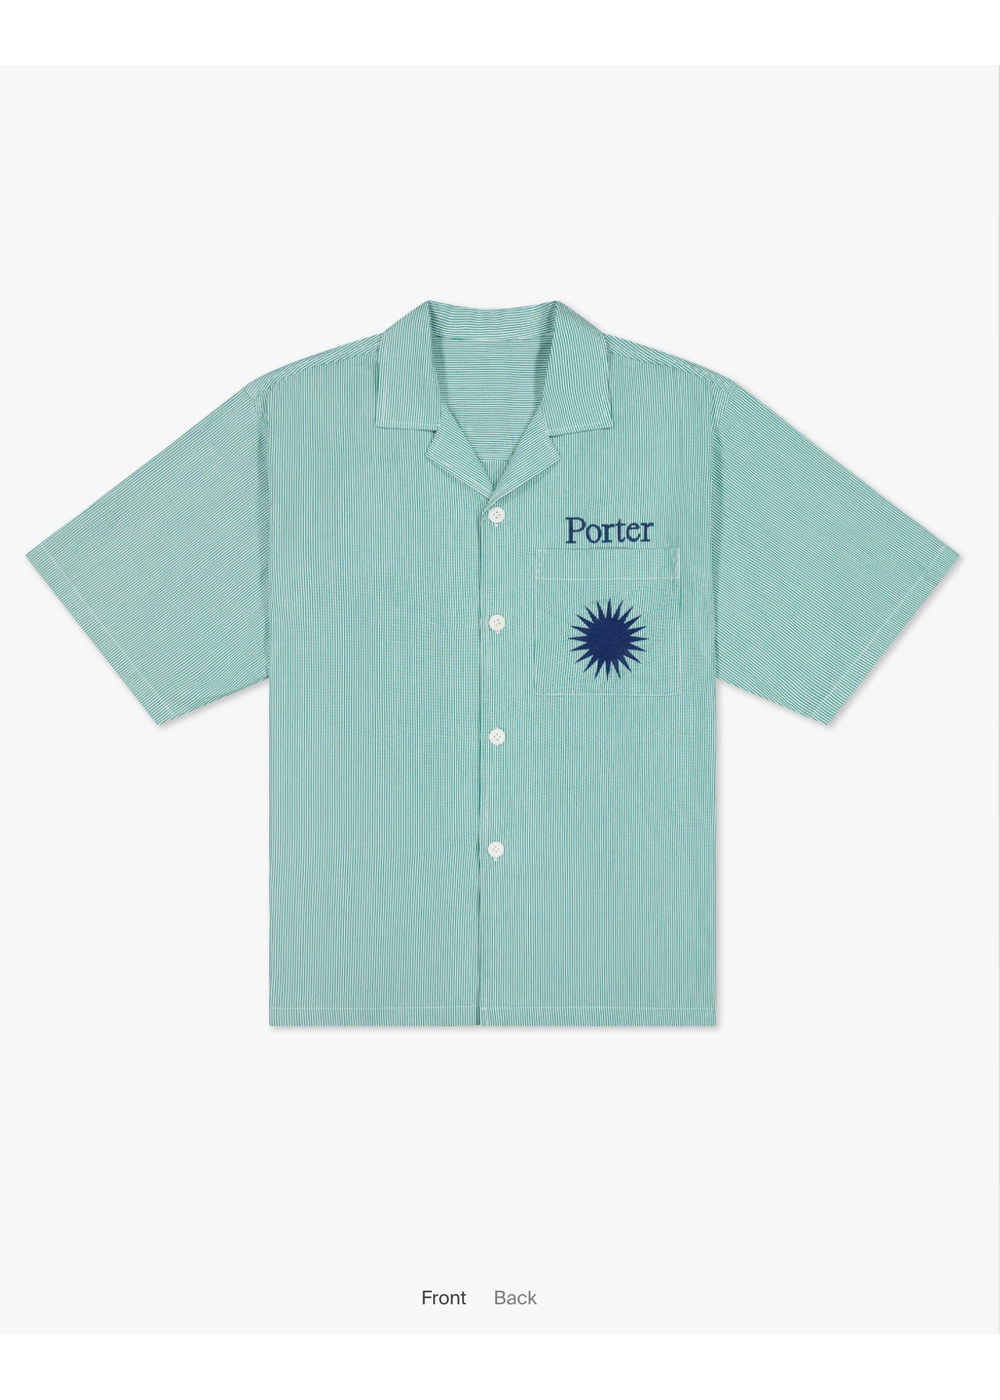 Revere Shirt W Pocket - Always Sunny Green Stripe W/Navy Emb | PORTER JAMES SPORTS | Mad About The Boy